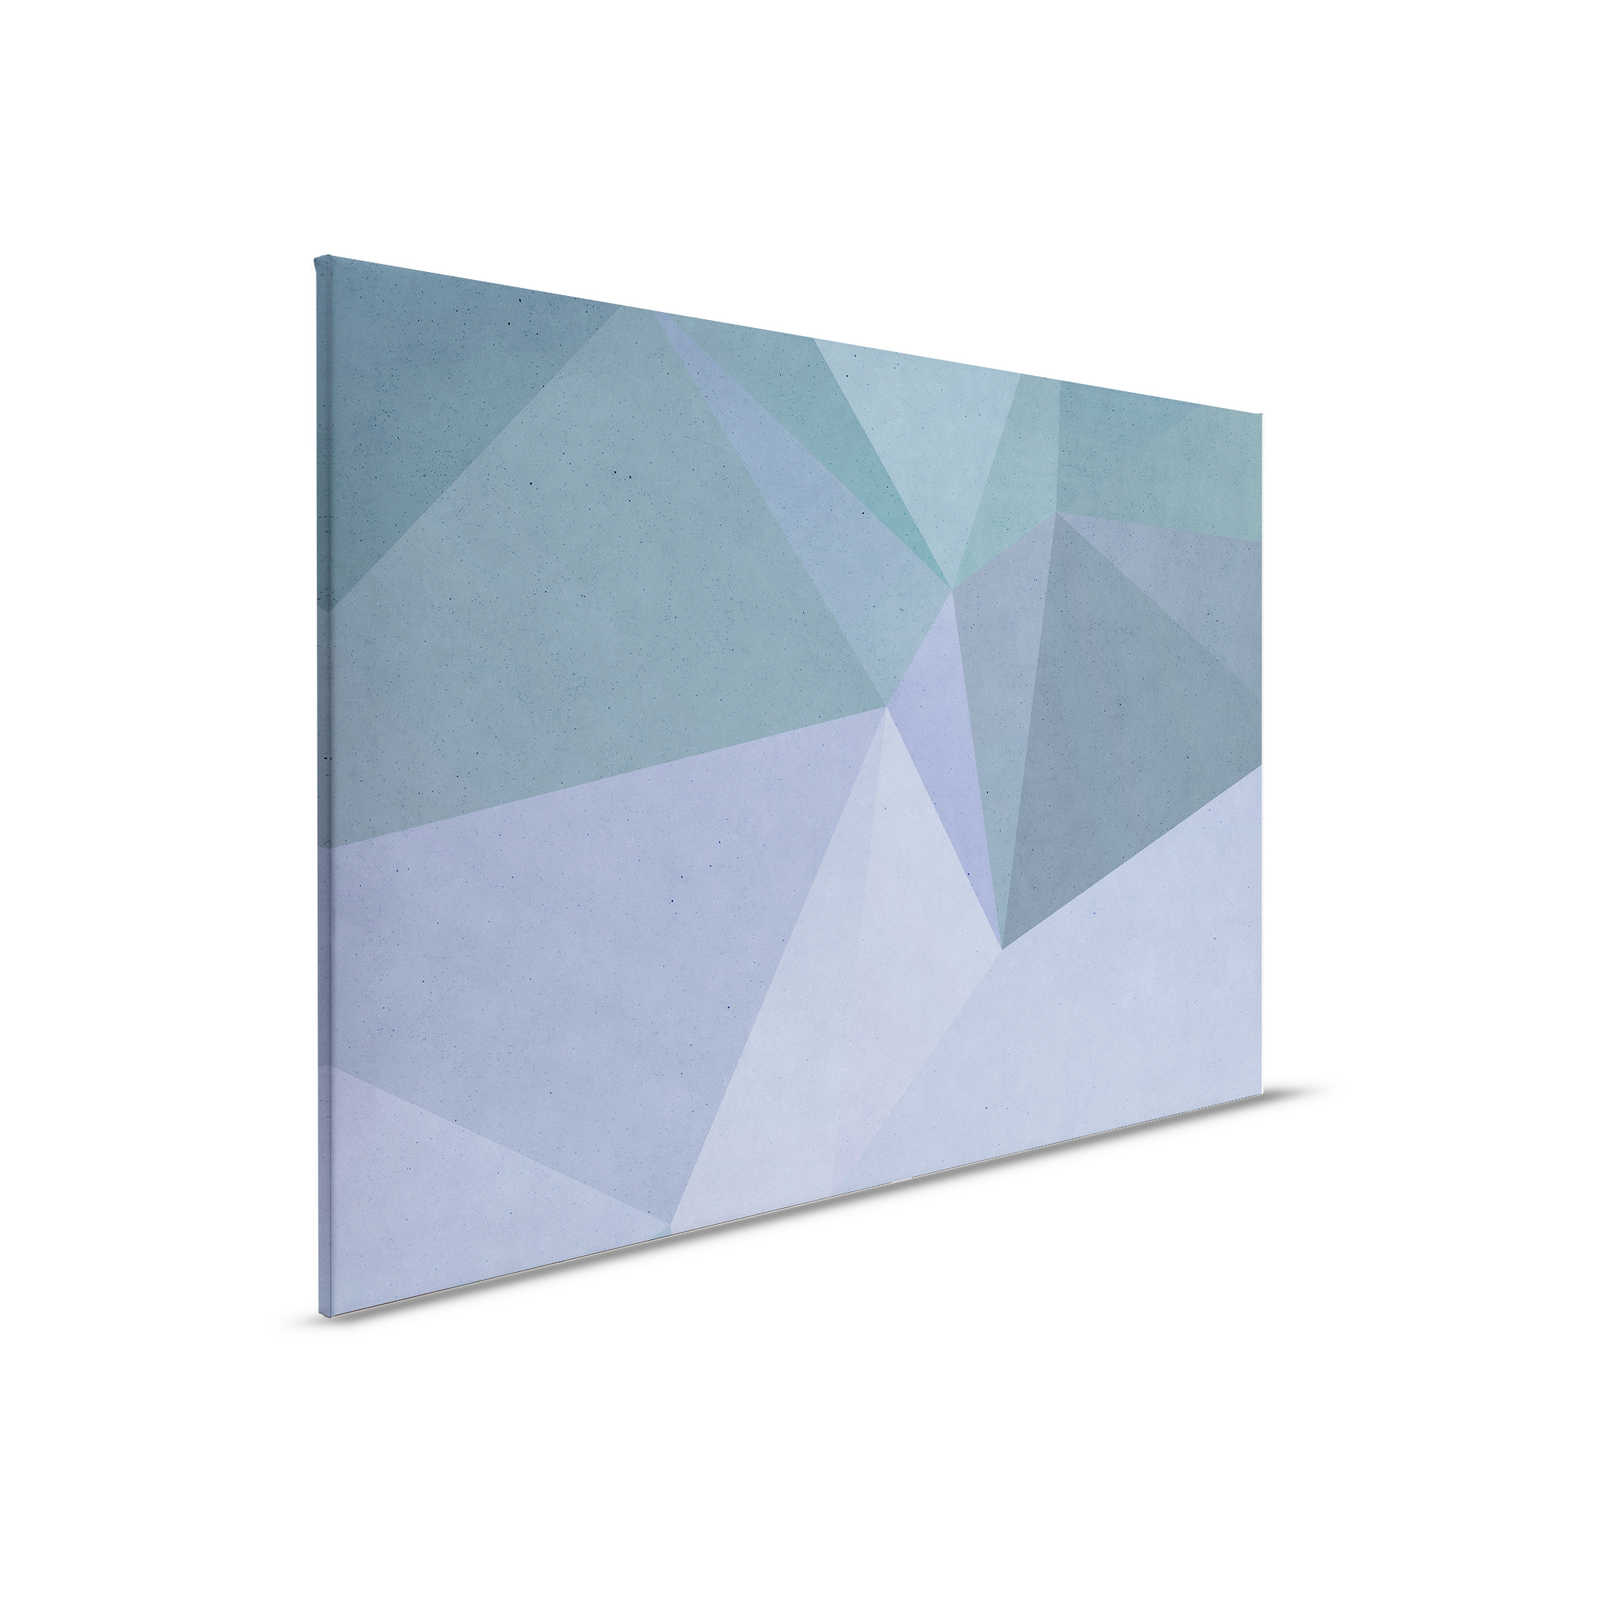         Canvas painting 3D optics geometric | blue, green - 0,90 m x 0,60 m
    